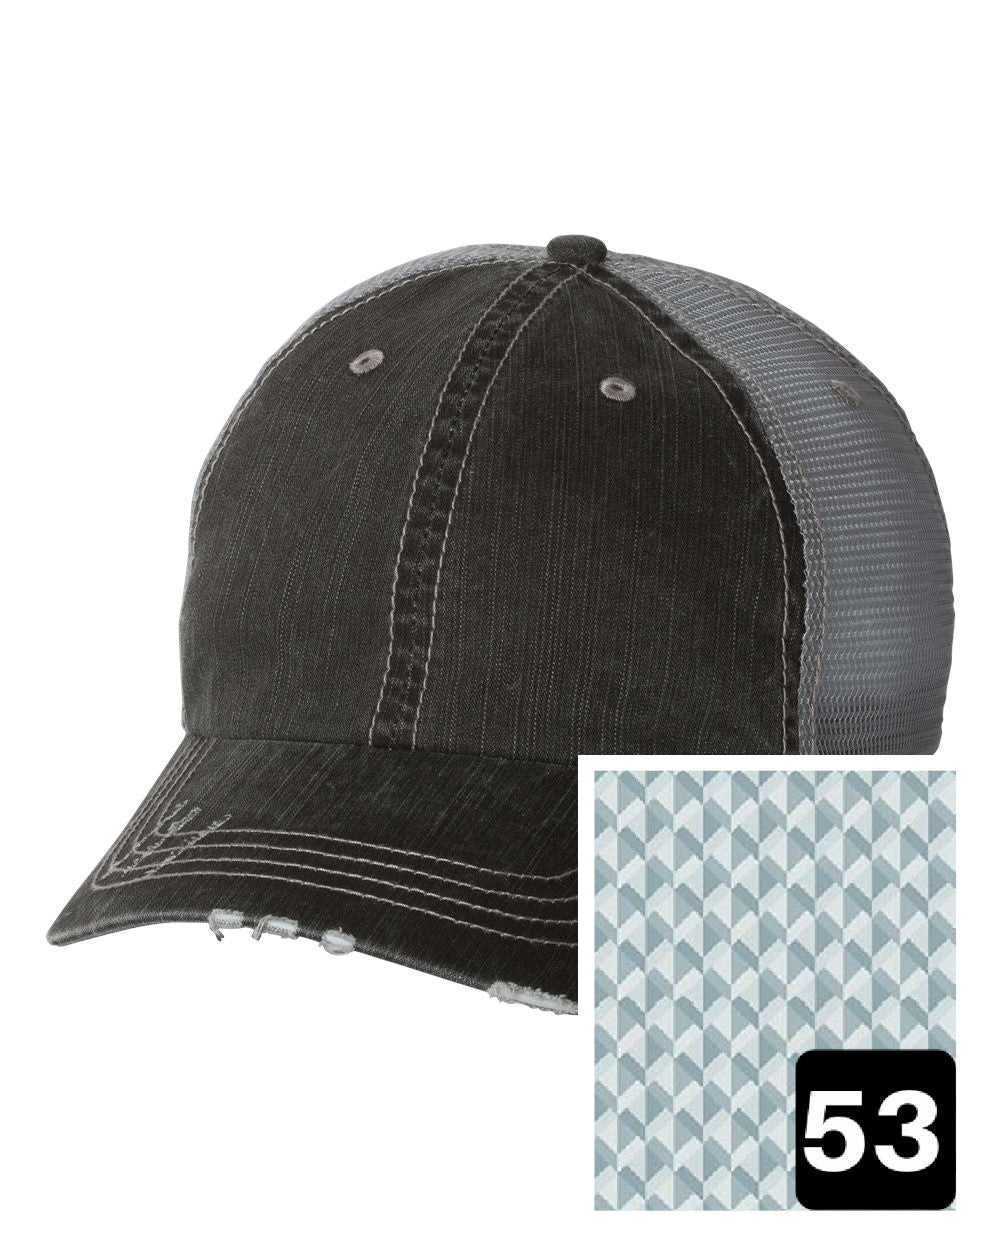 gray distressed trucker hat with multi-color stripe fabric state of North Dakota